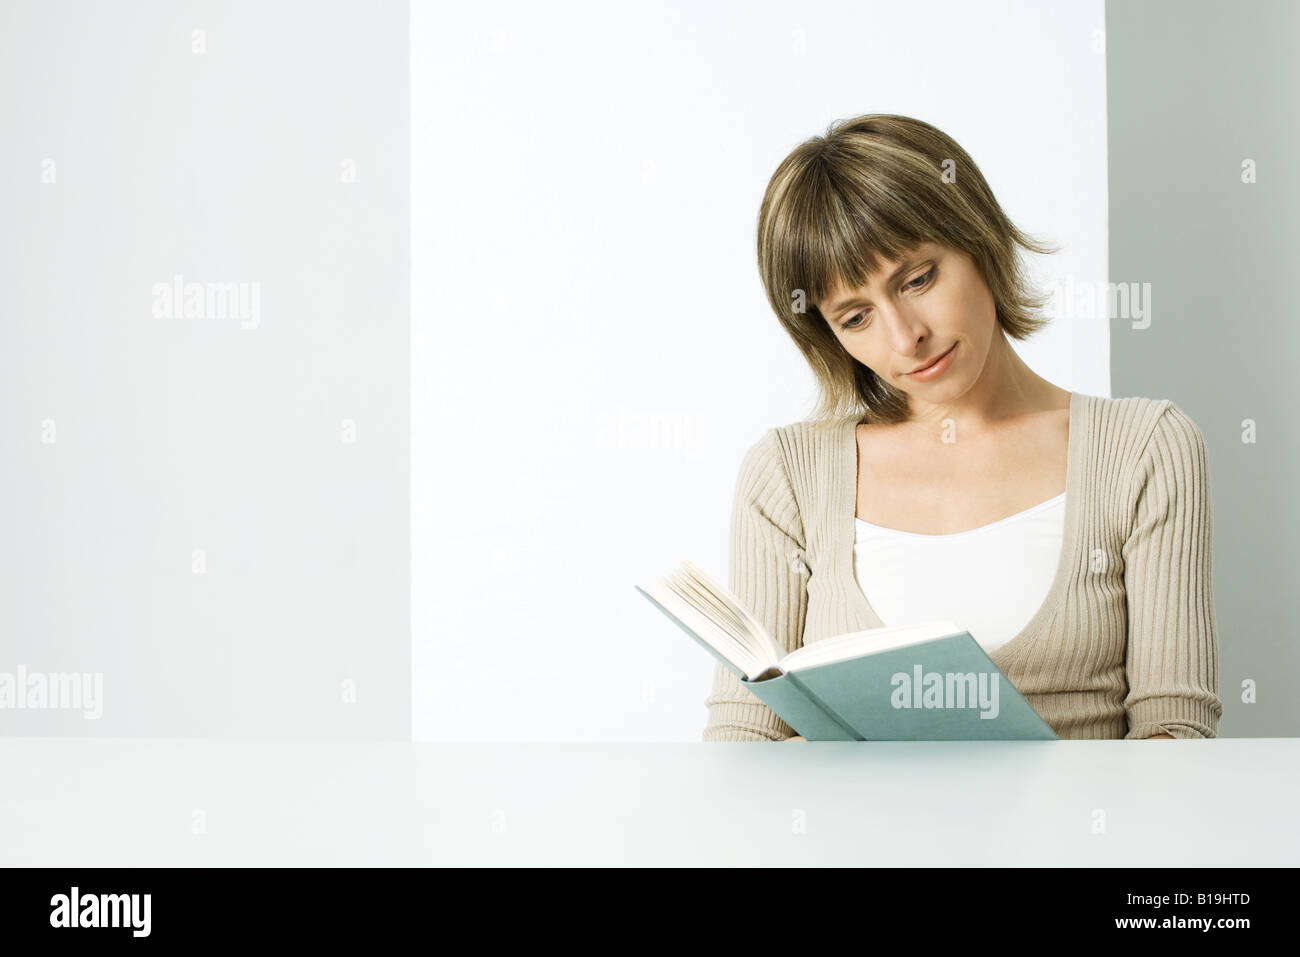 Woman sitting, reading book Stock Photo